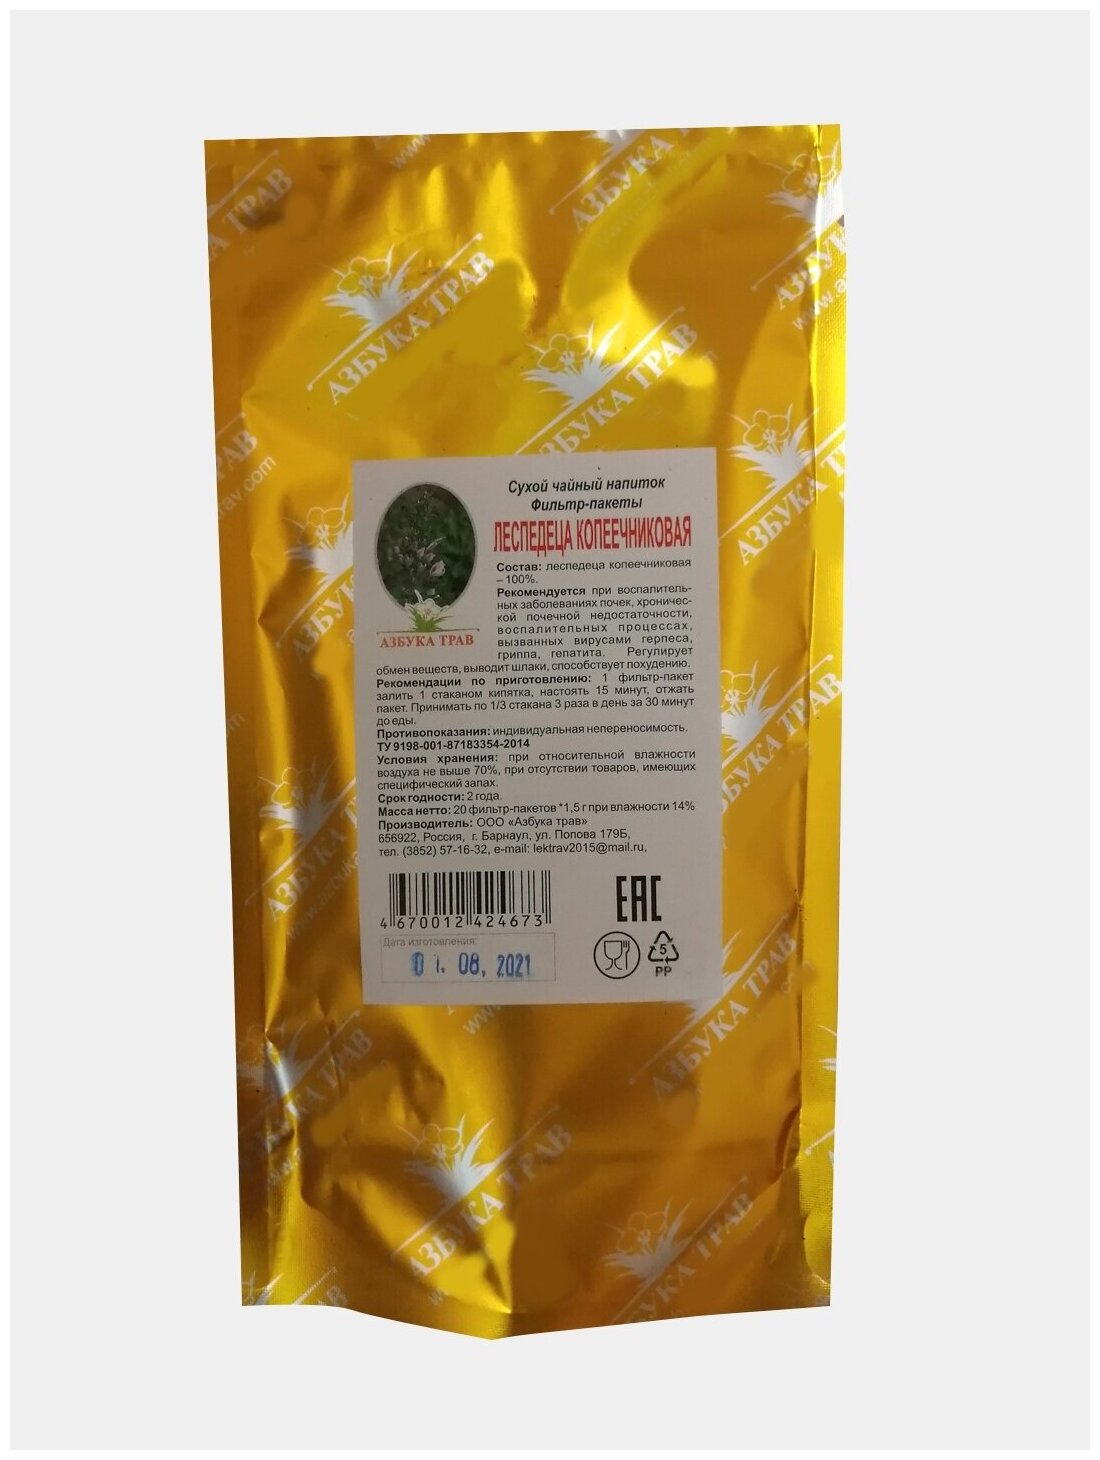 Леспедеца копеечниковая трава 15гр*20 фильтр-пакетов (Азбука трав)